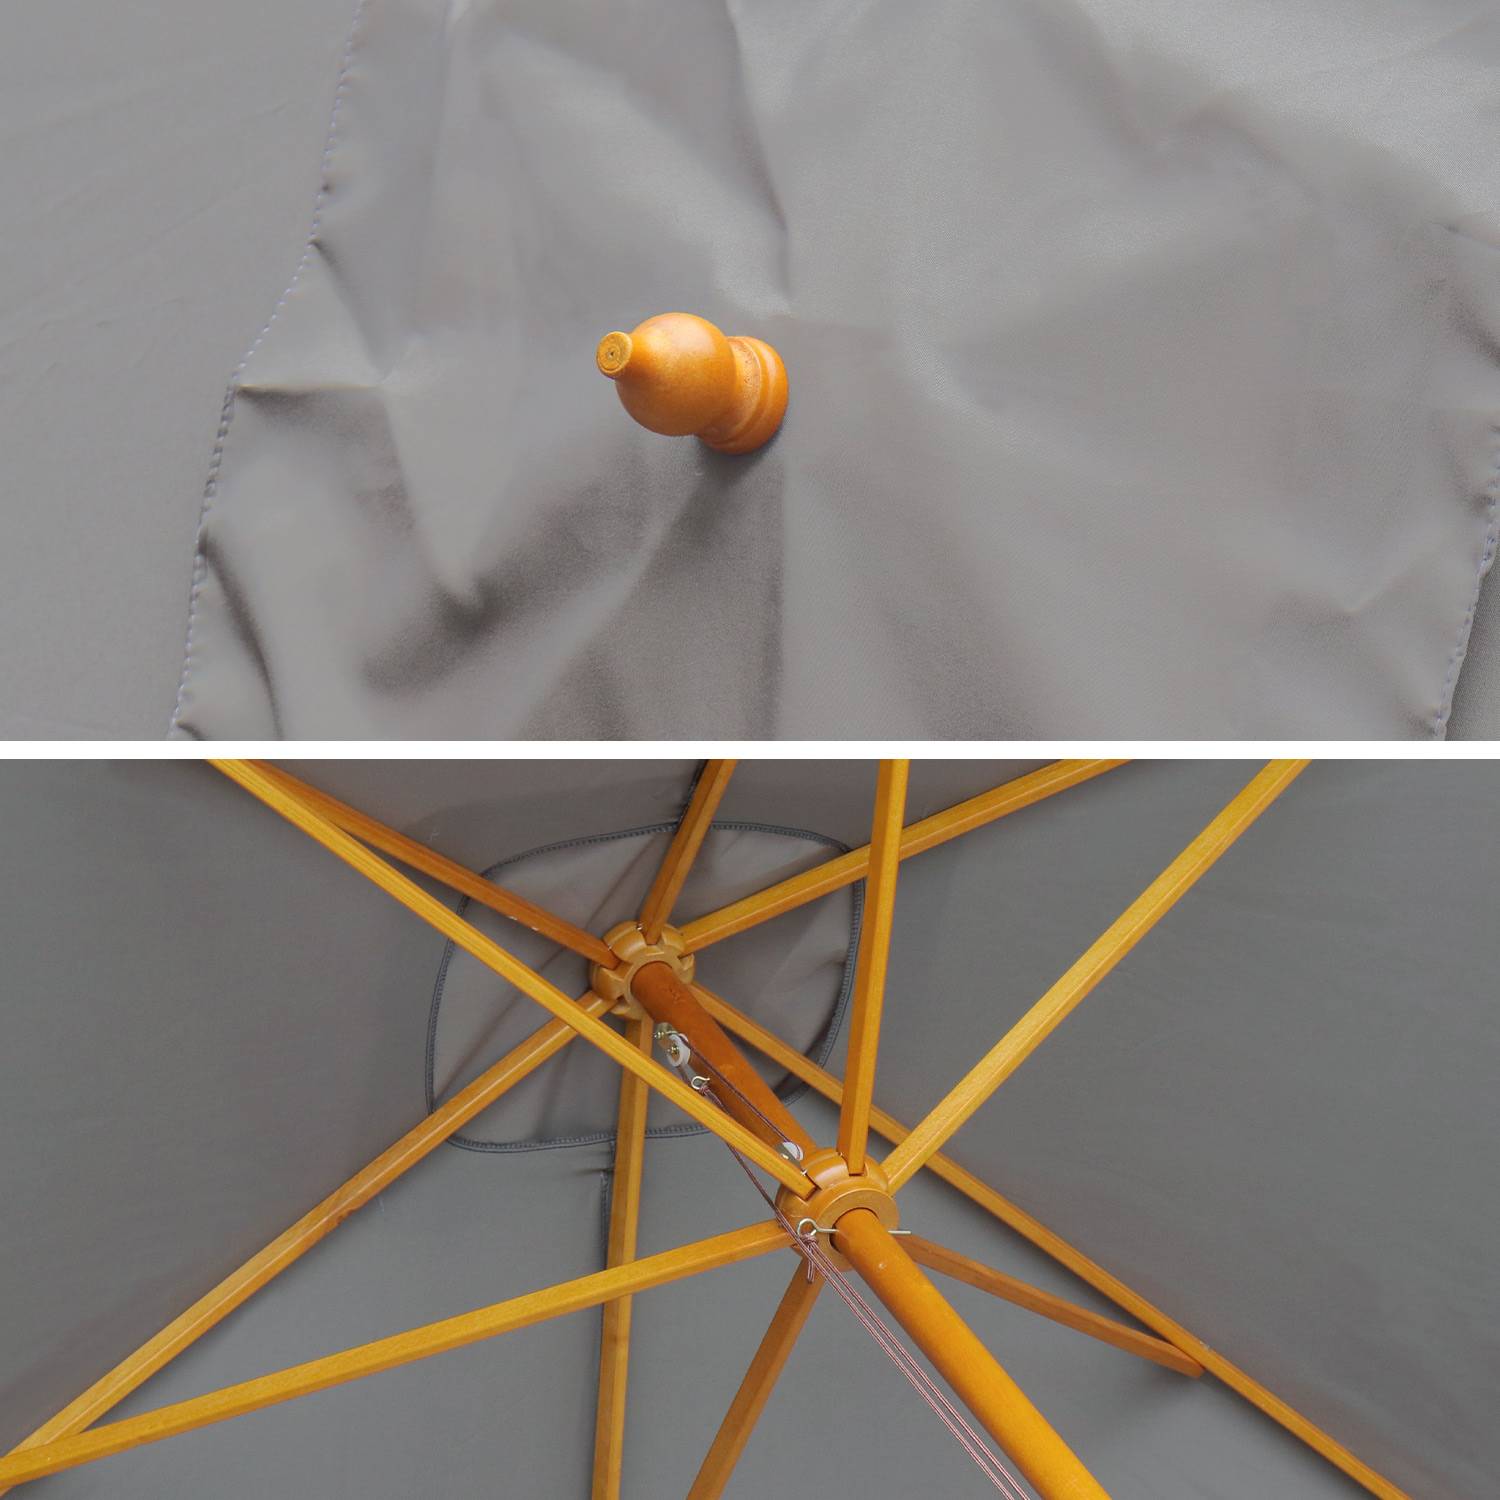 Parasol rectangular de madera 2x3m - Cabourg Gris - poste central de madera, sistema de apertura manual, polea Photo5